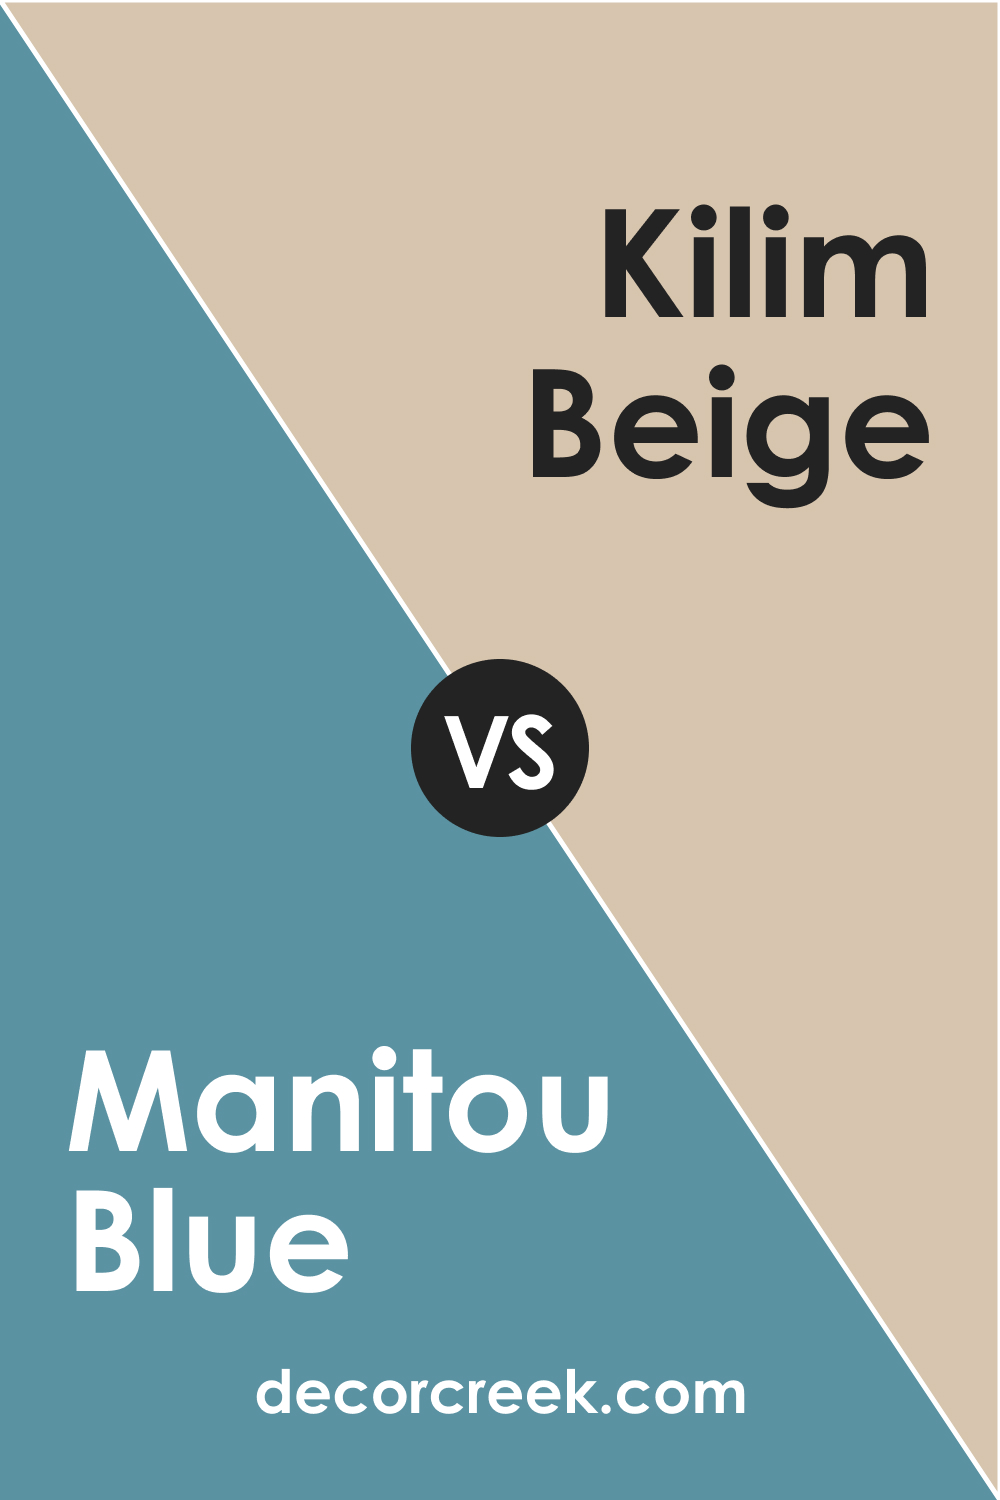 SW 6501 Manitou Blue vs. SW 6106 Kilim Beige